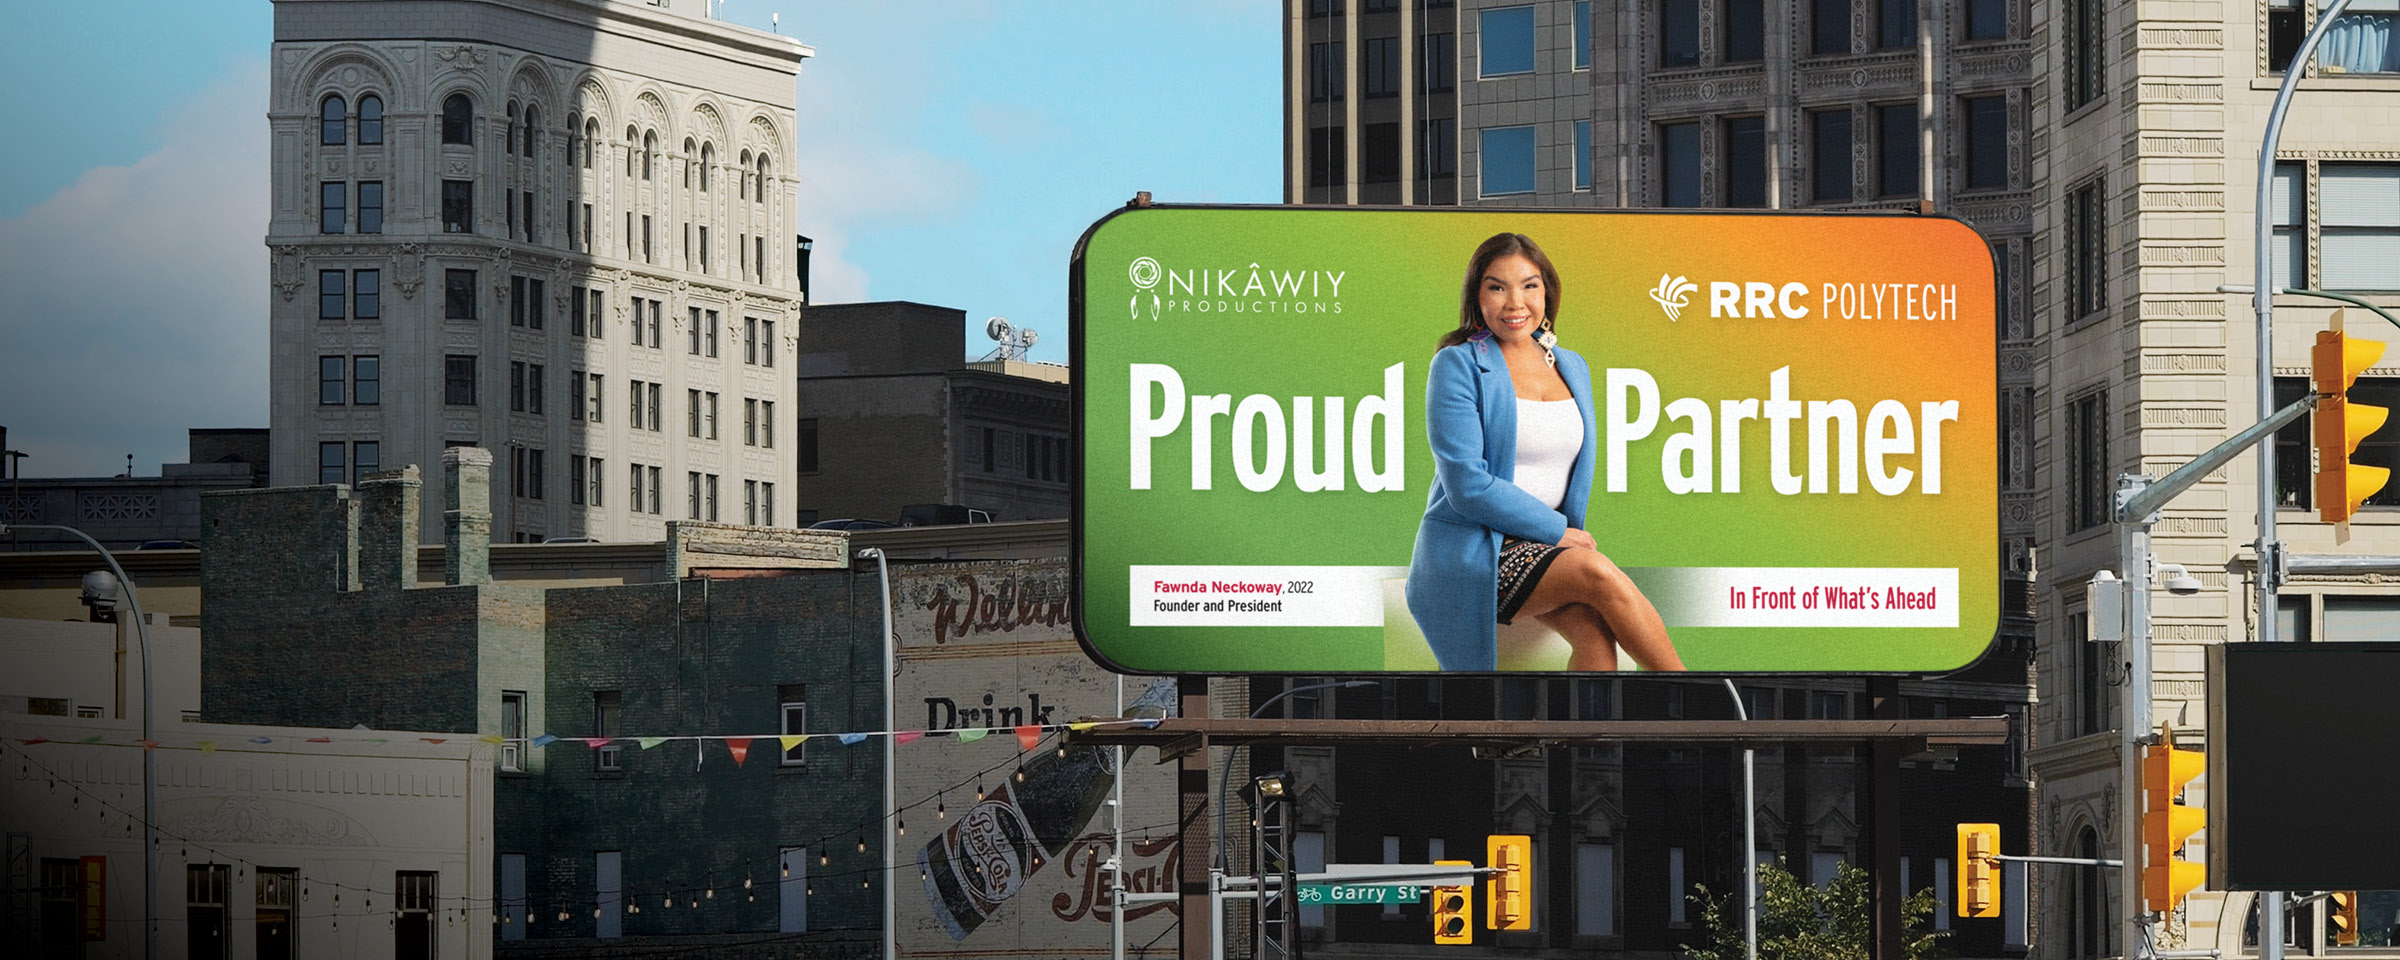 Winnipeg skyline with "Proud Partner" billboard of RRC Polytech graduate Fawnda Neckoway.